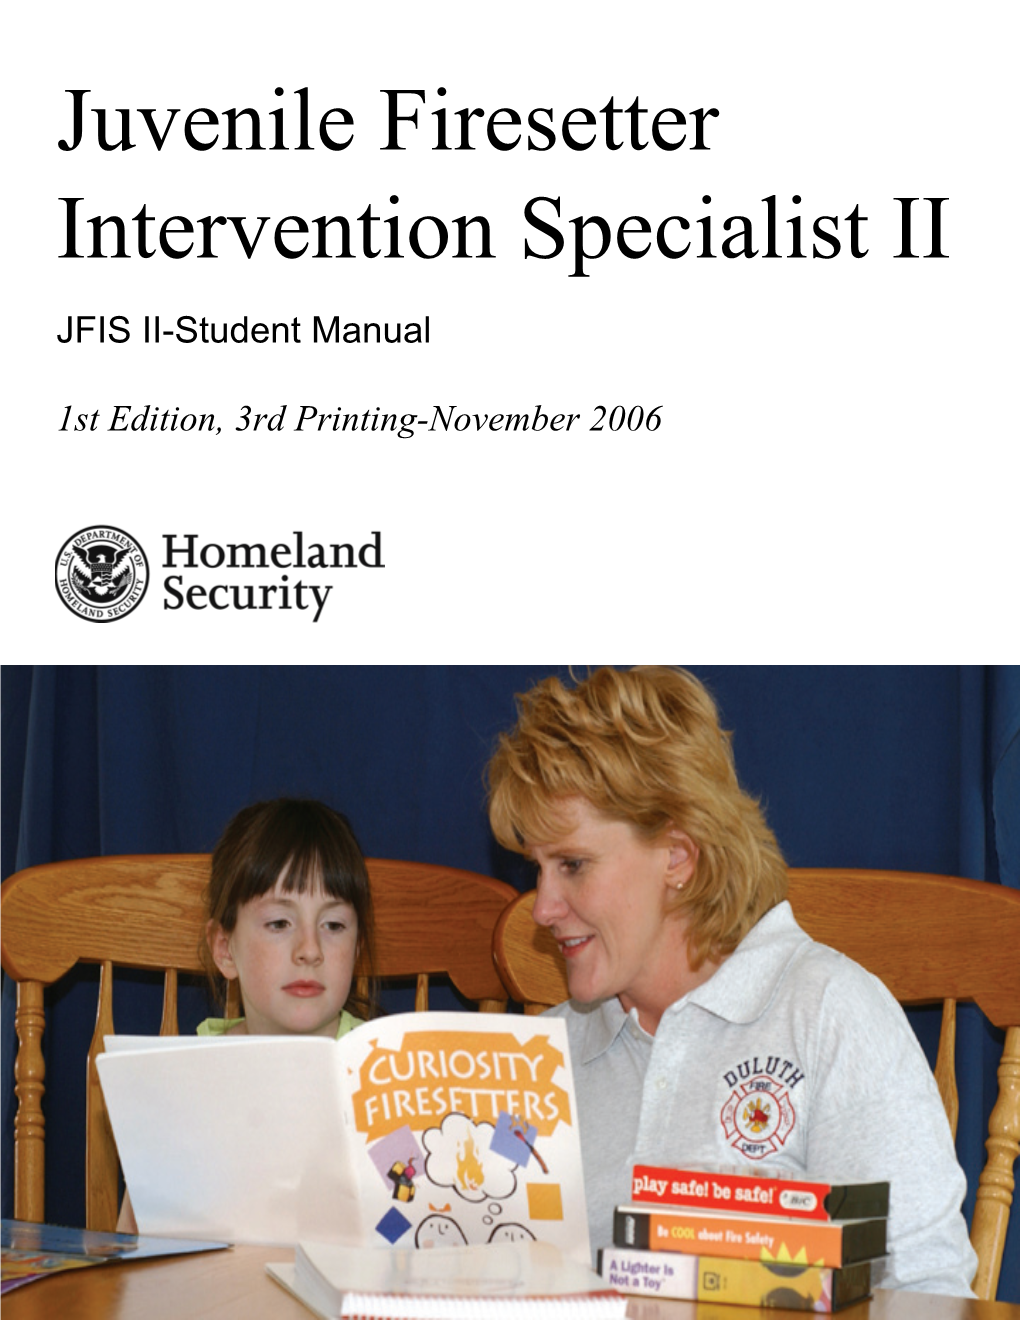 Juvenile Firesetter Intervention Specialist II-Student Manual